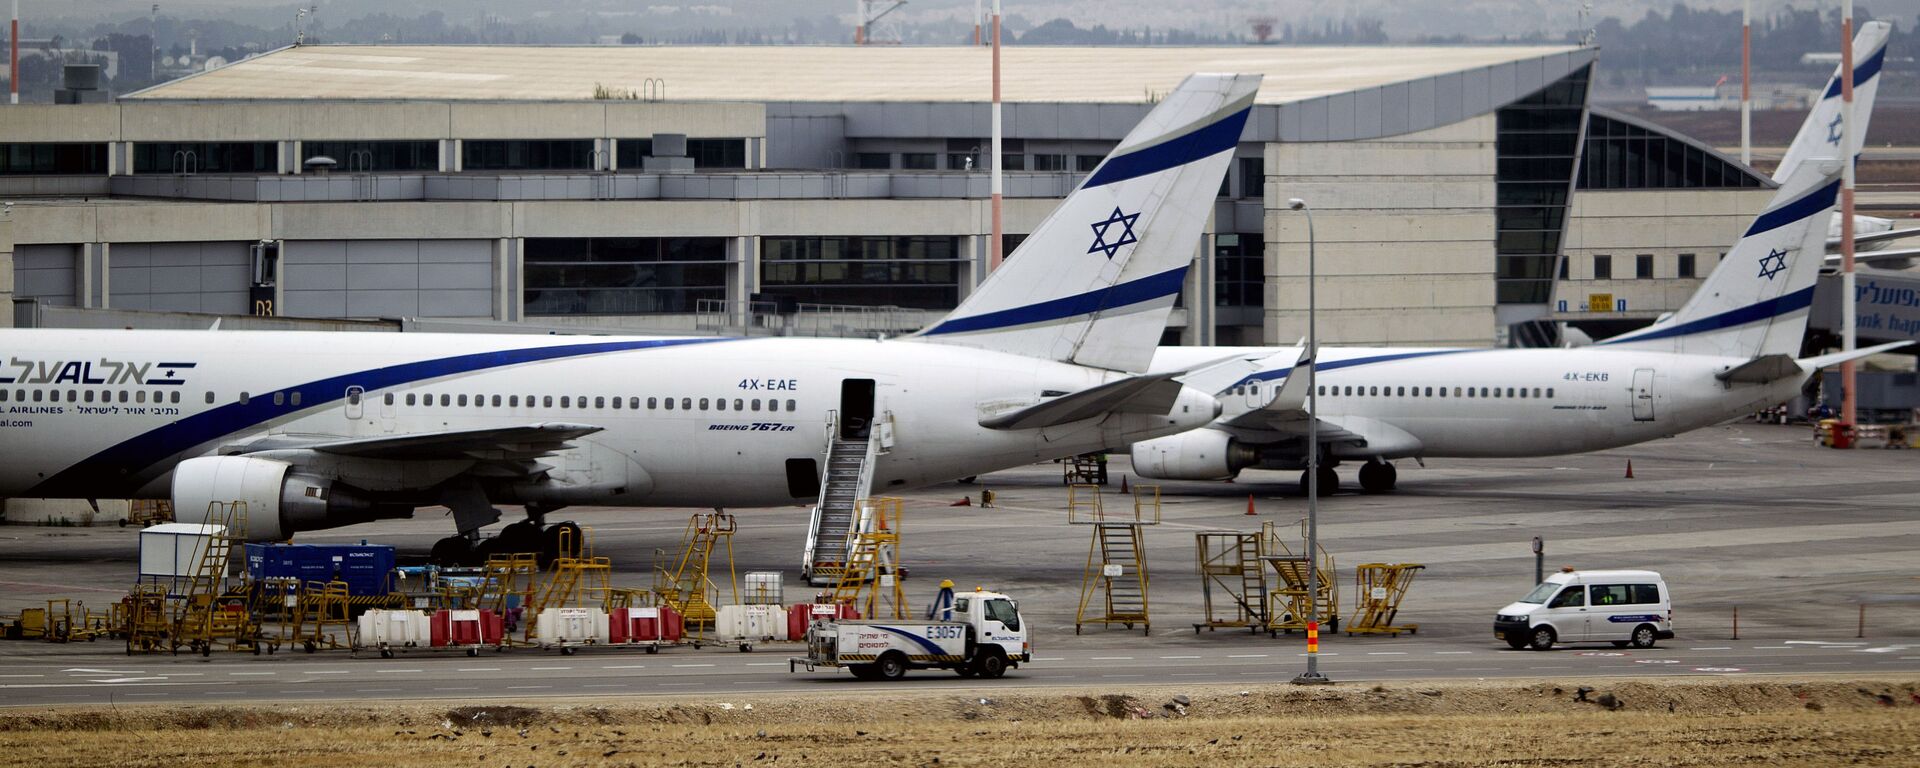 مطار بن غوريون الدولي في تل أبيب، إسرائيل 21 أبريل/ نيسان 2013 - سبوتنيك عربي, 1920, 20.06.2023